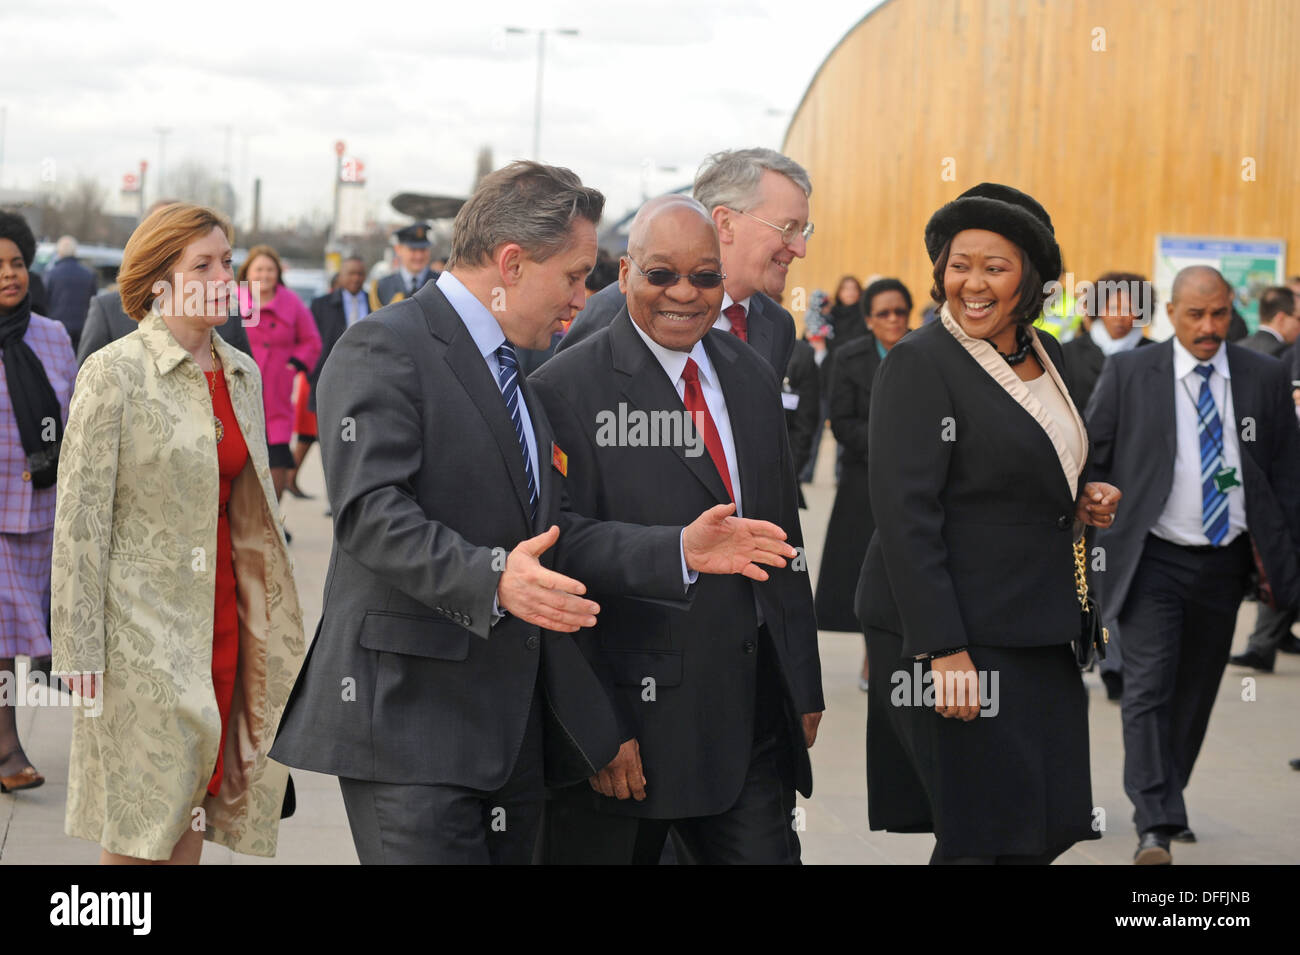 Jacob Zuma mit Frau Thobeka Madiba besucht Sainsbury's Greenwich CEO Justin King Umwelt Minister Hilary Benn 03.04.2010 Stockfoto